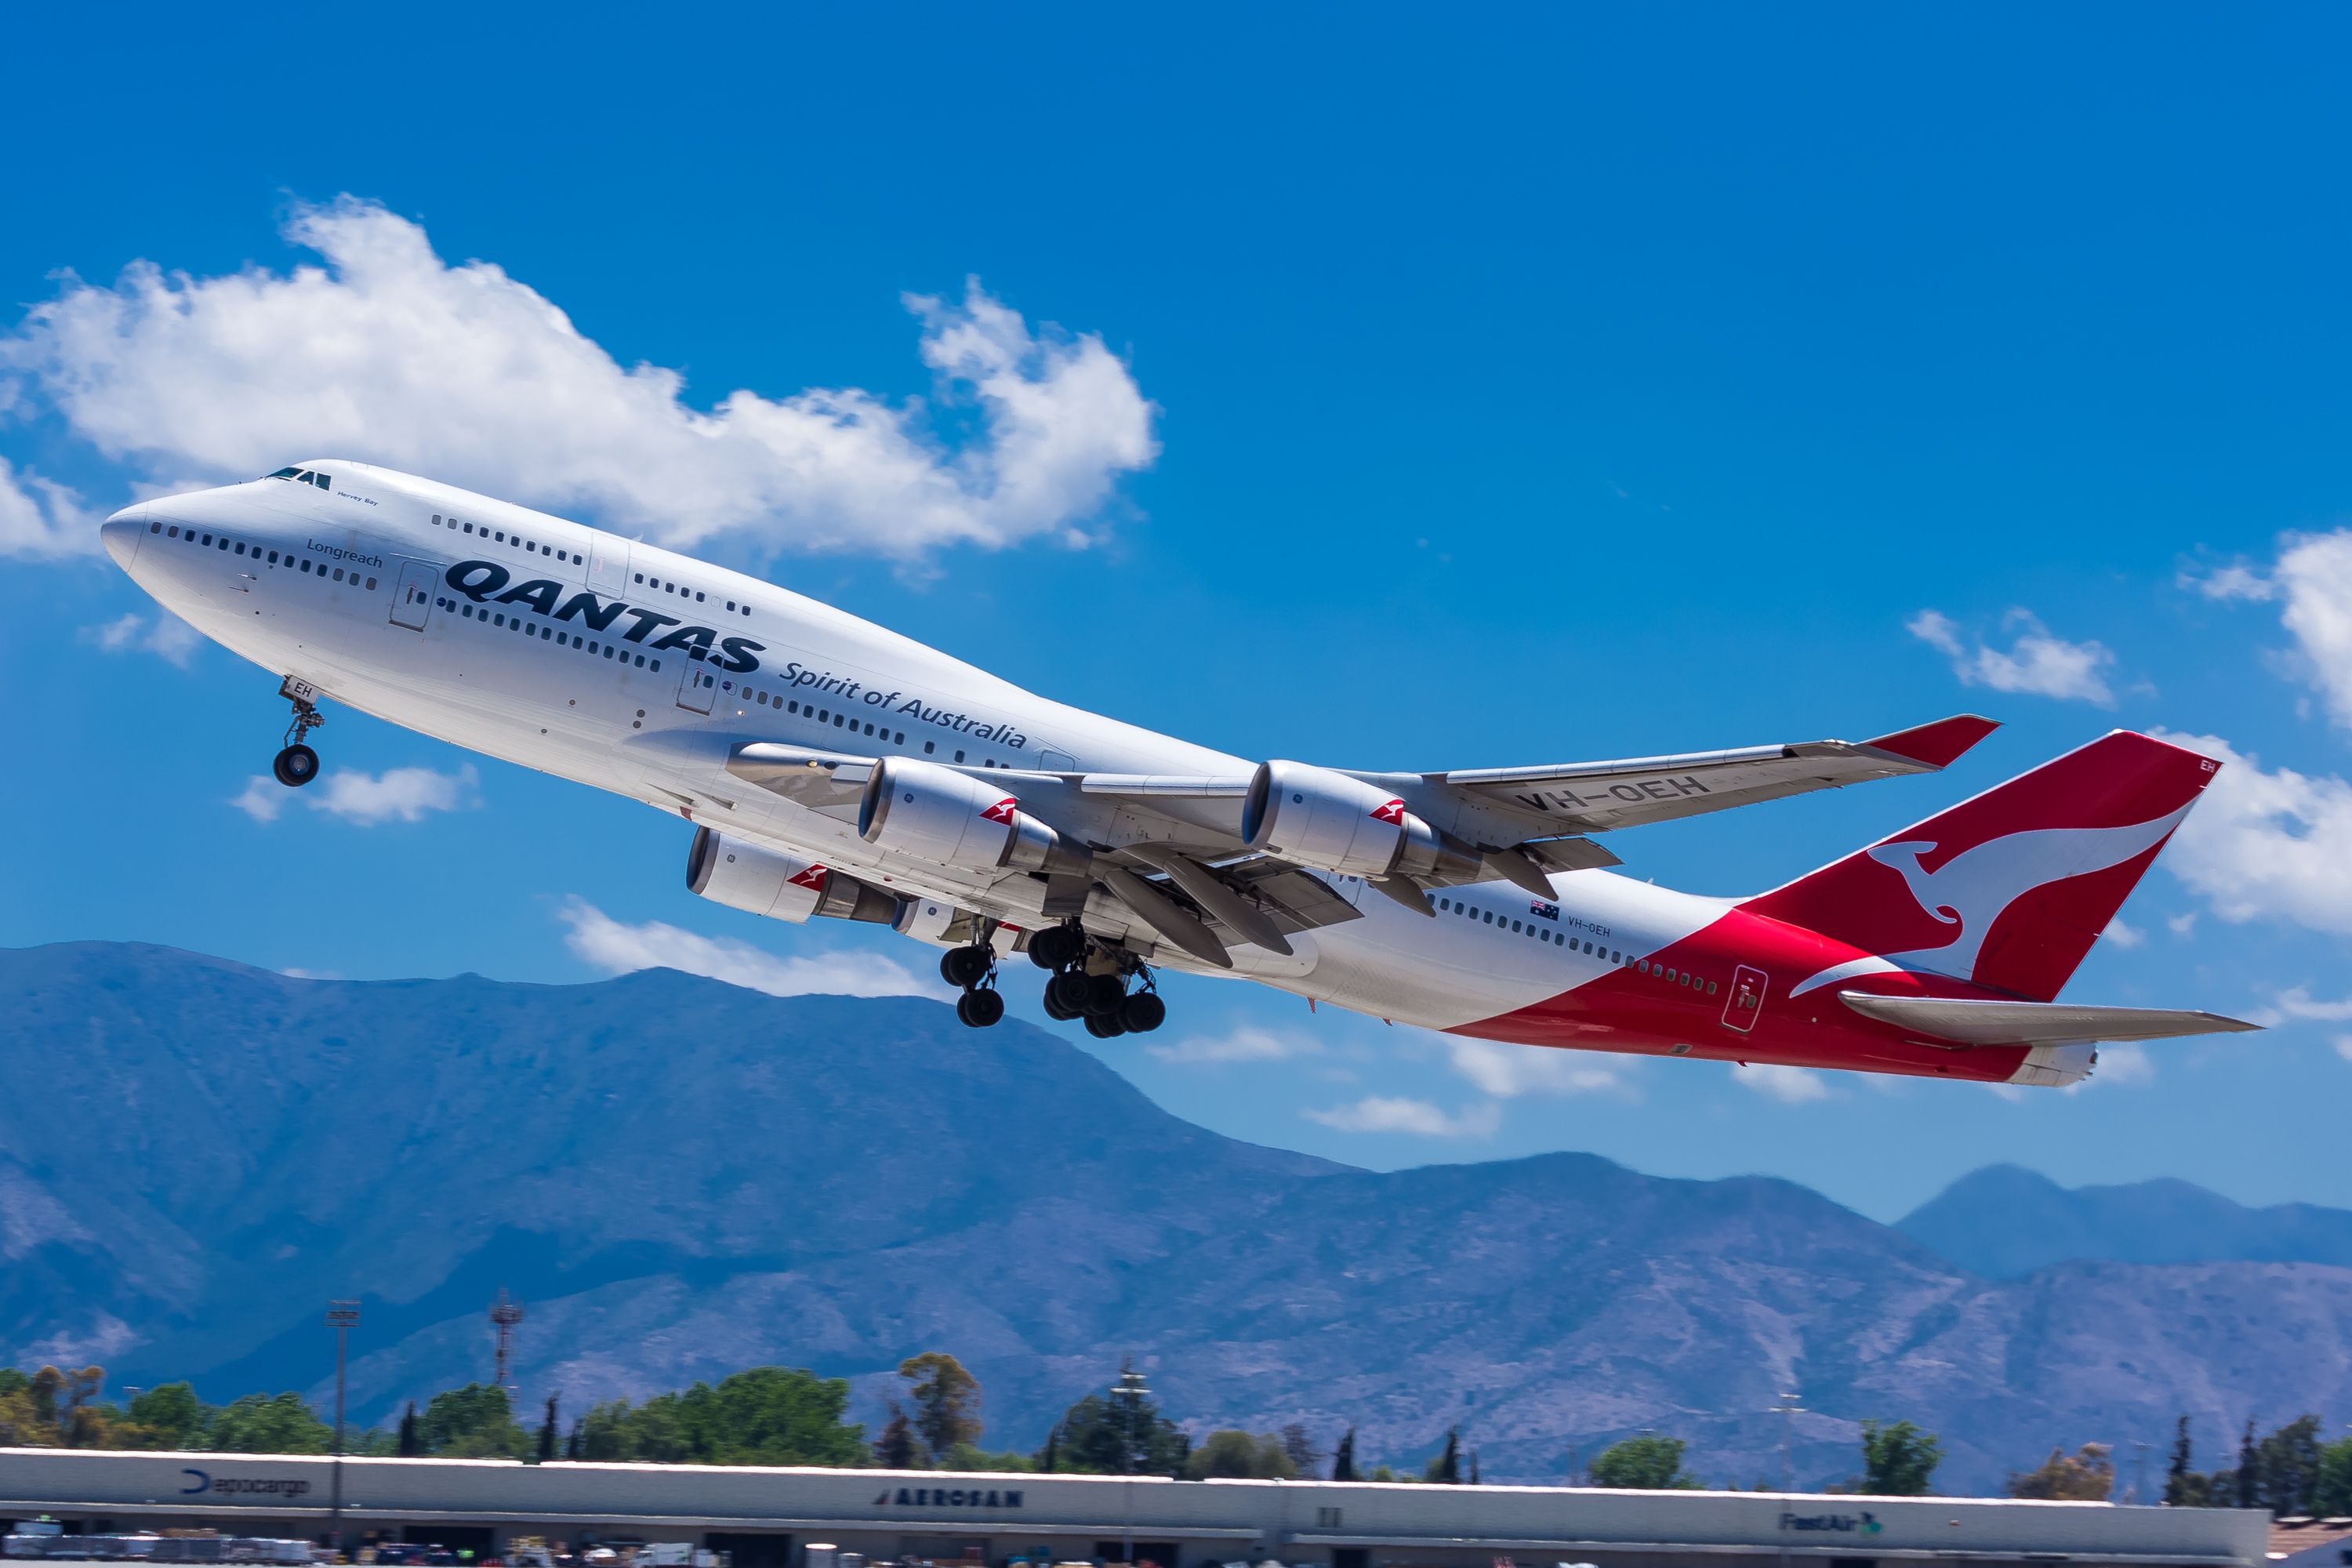 a qantas airlines plane